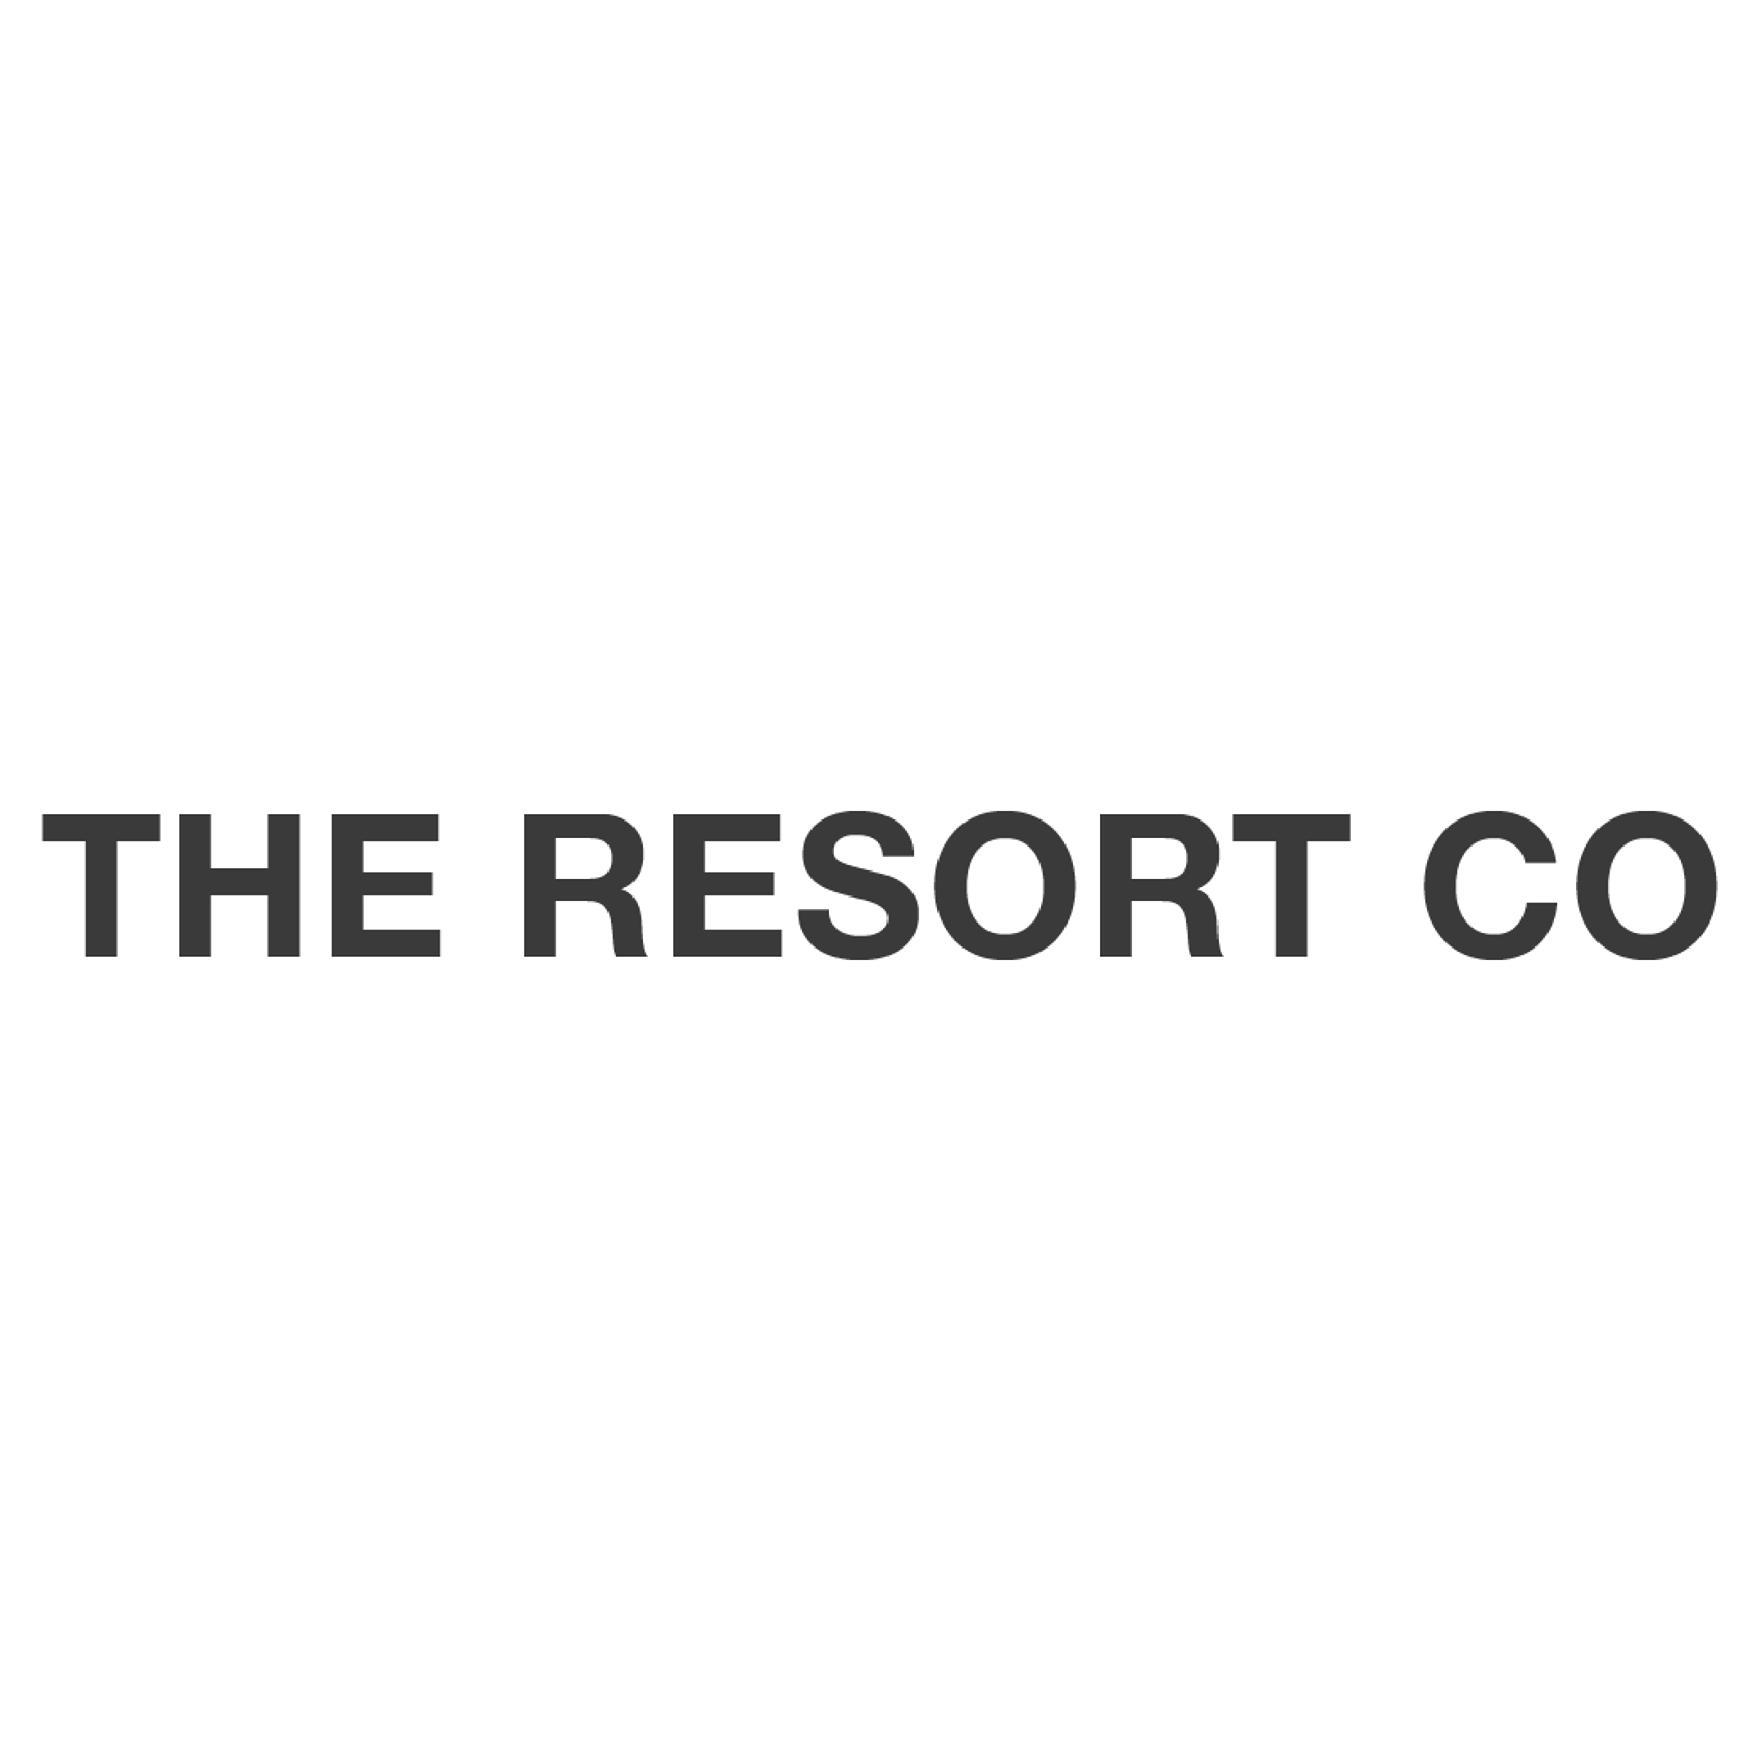 Promo codes The Resort Co